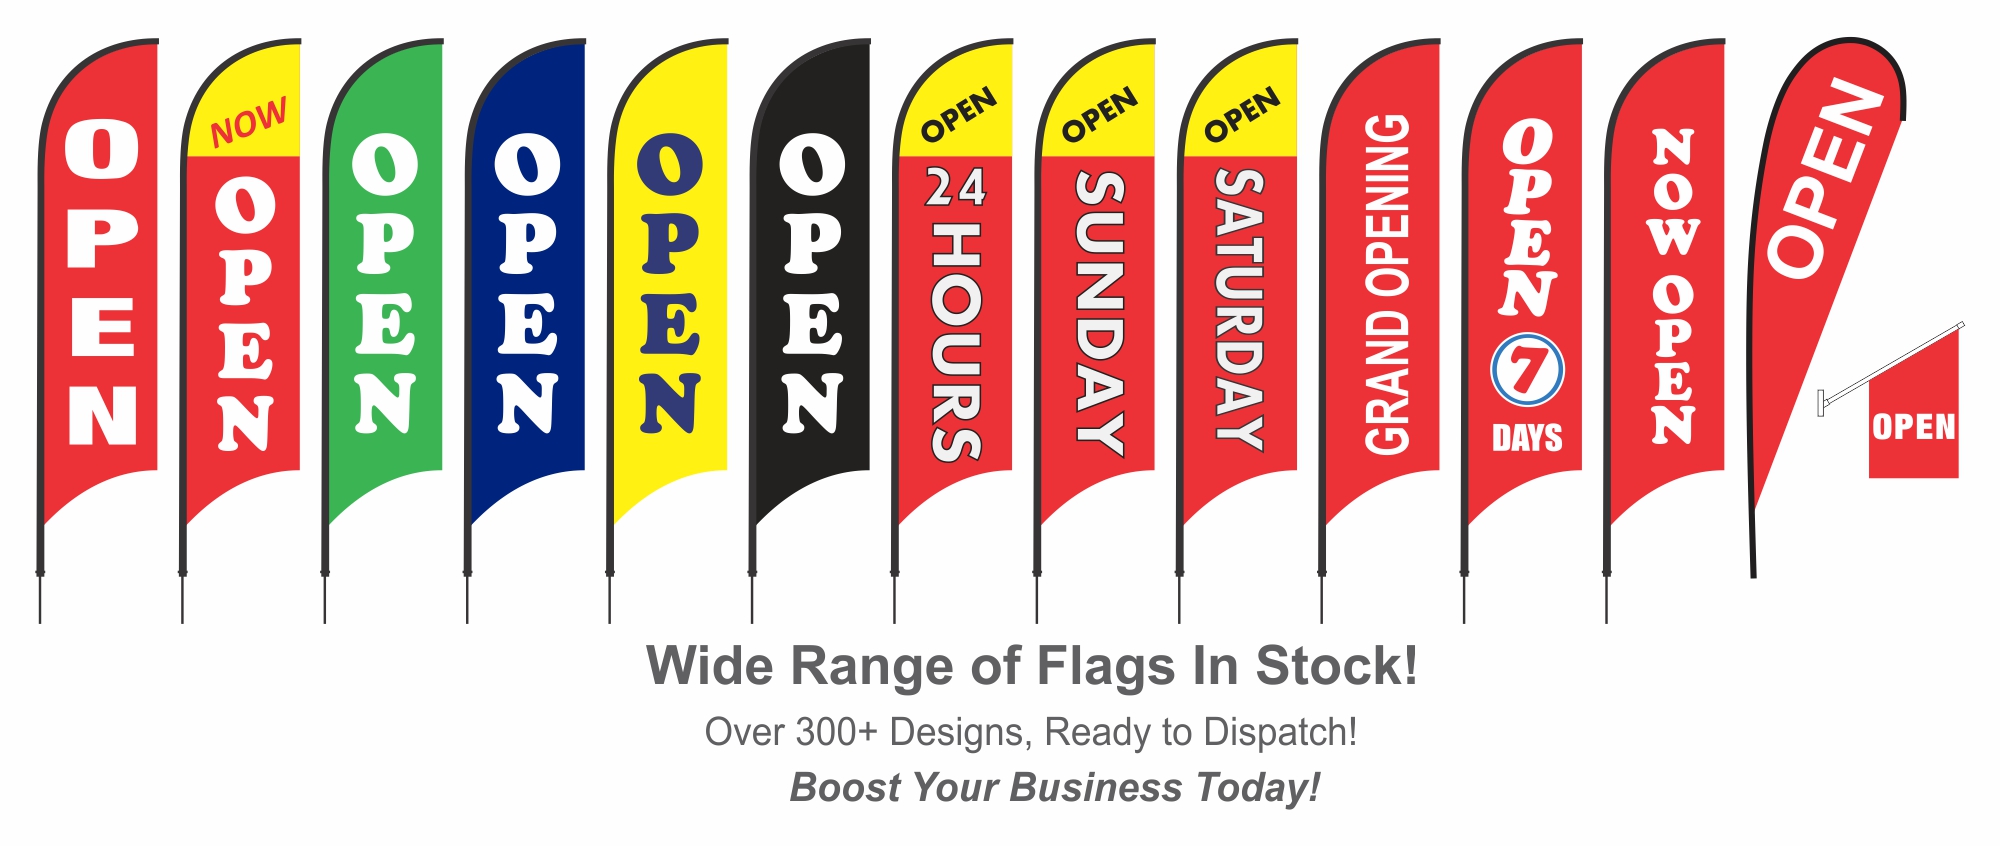 OPEN Flags in stock